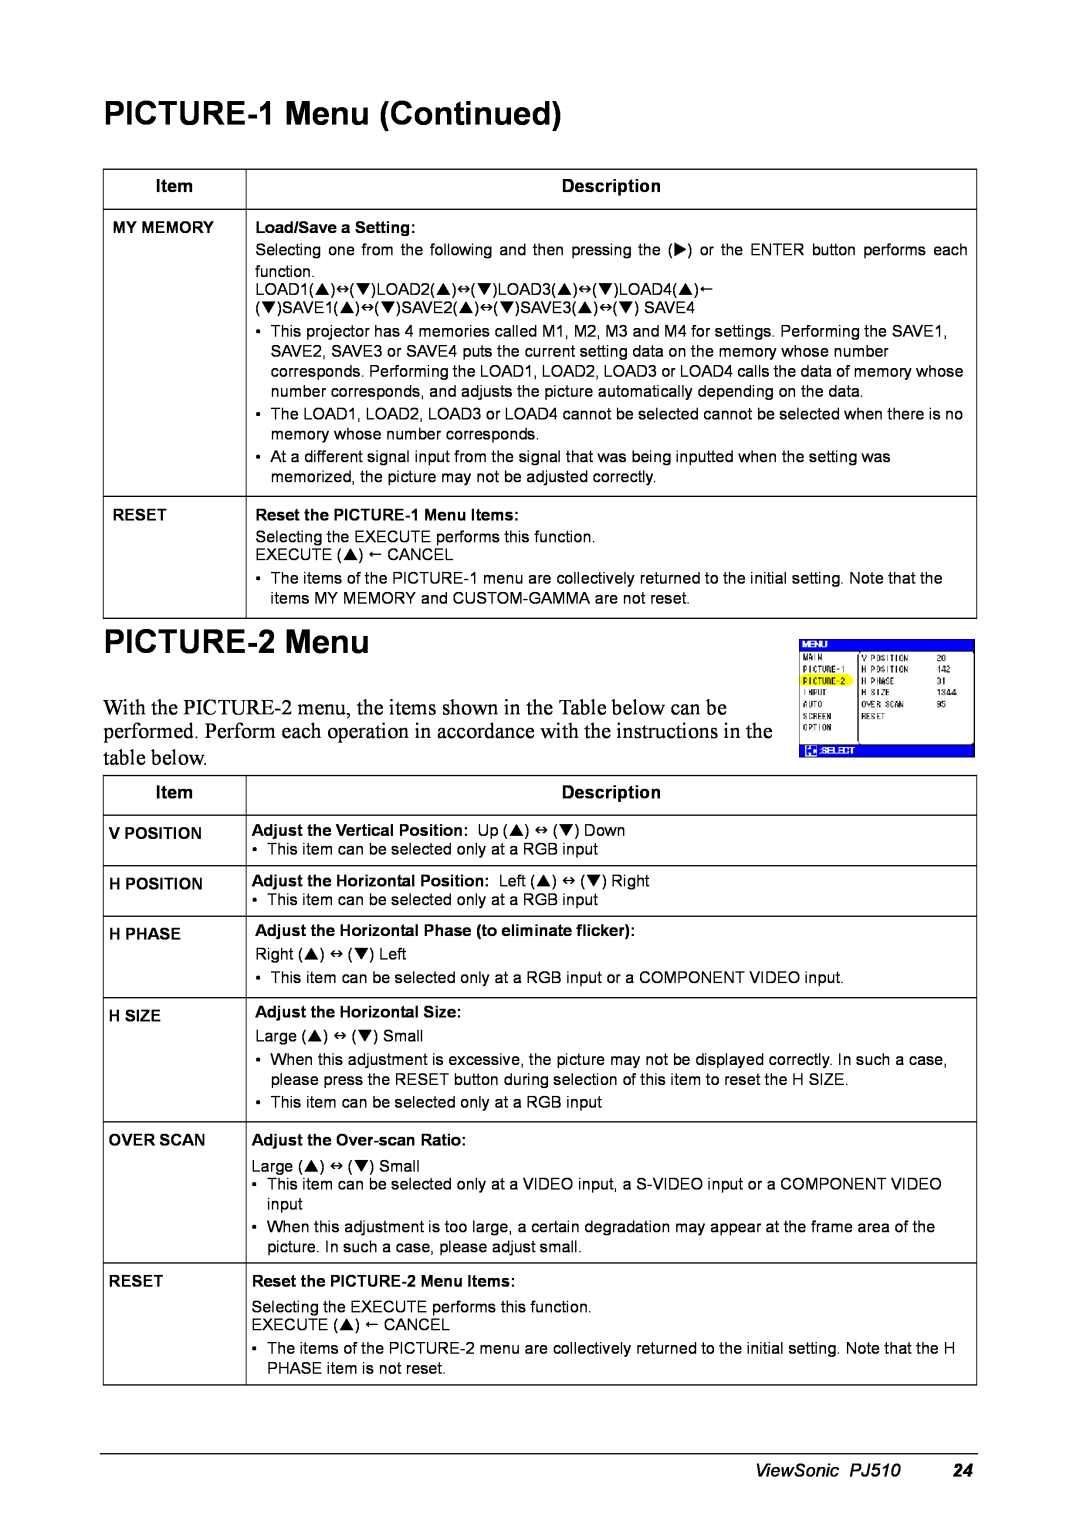 ViewSonic manual PICTURE-1 Menu Continued, PICTURE-2 Menu, Description, ViewSonic PJ510 